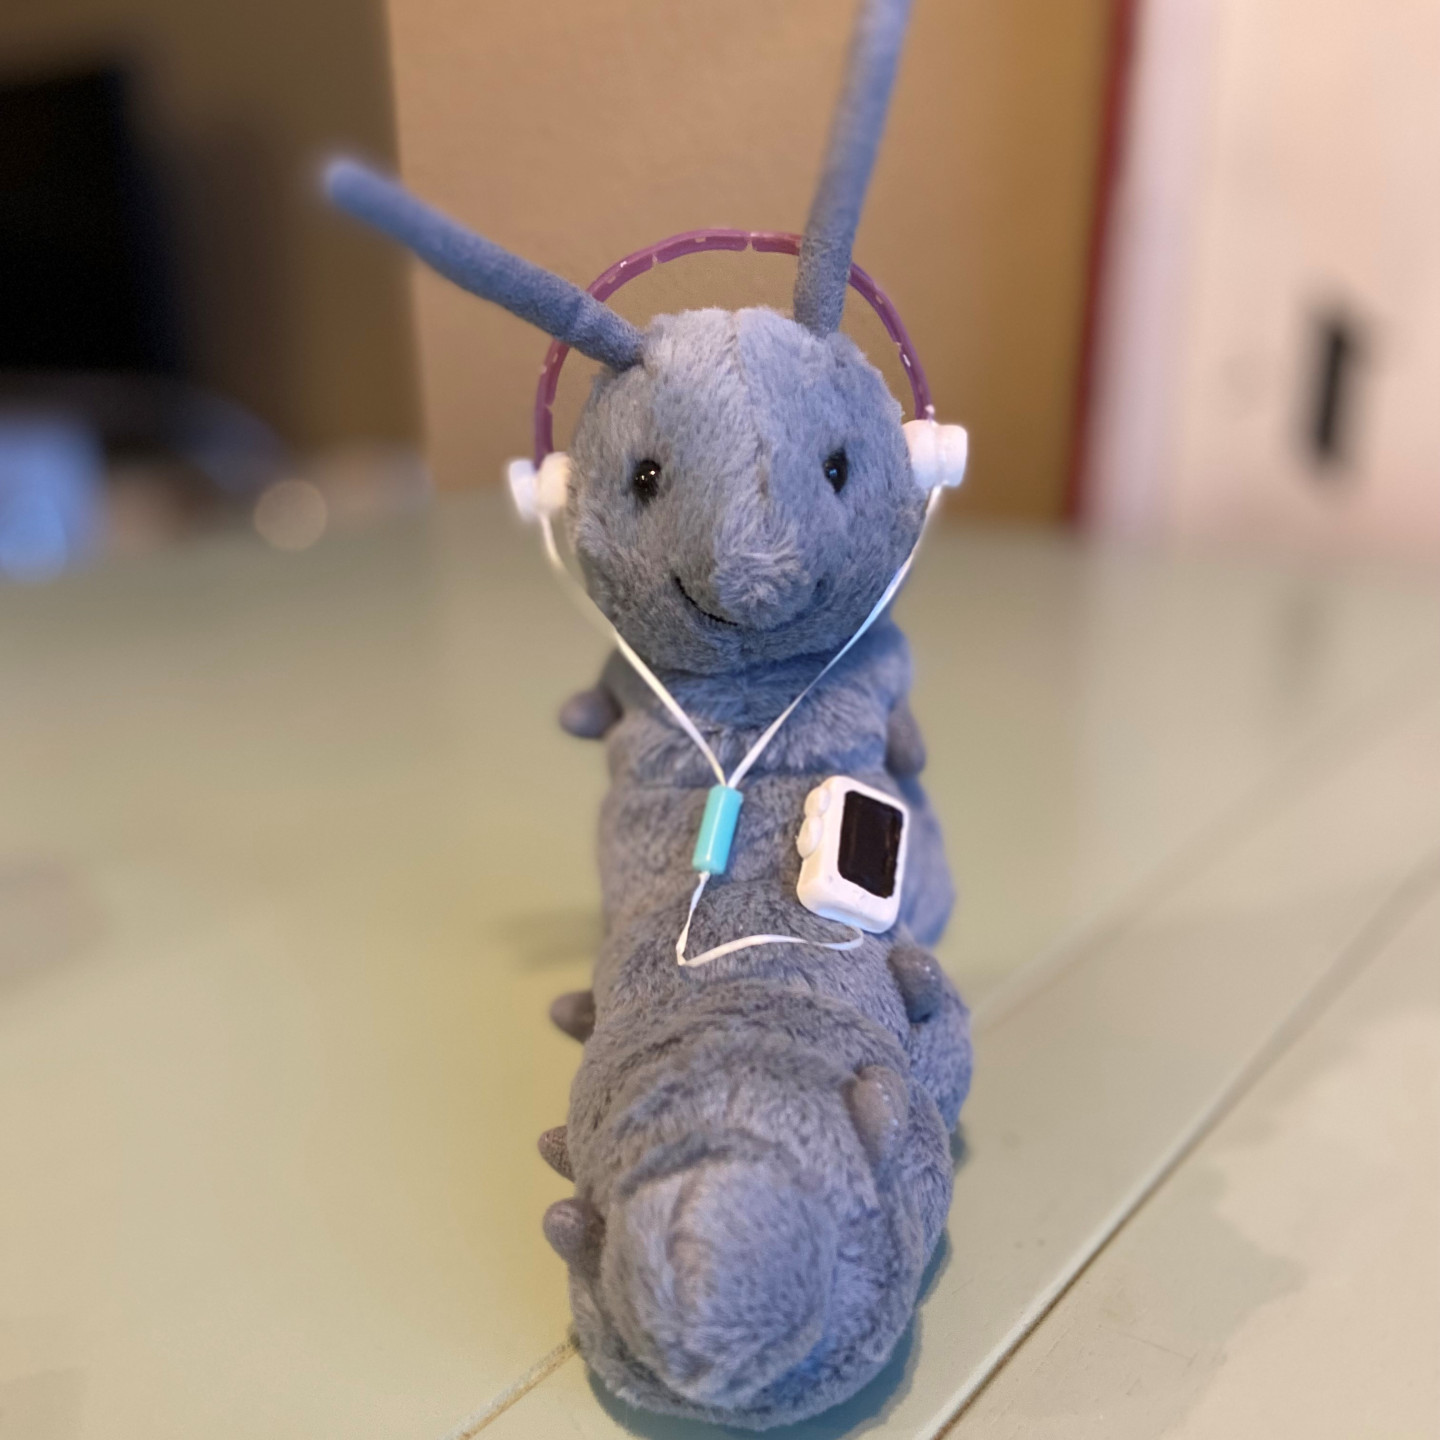 Blue bug stuffy wearing headphones